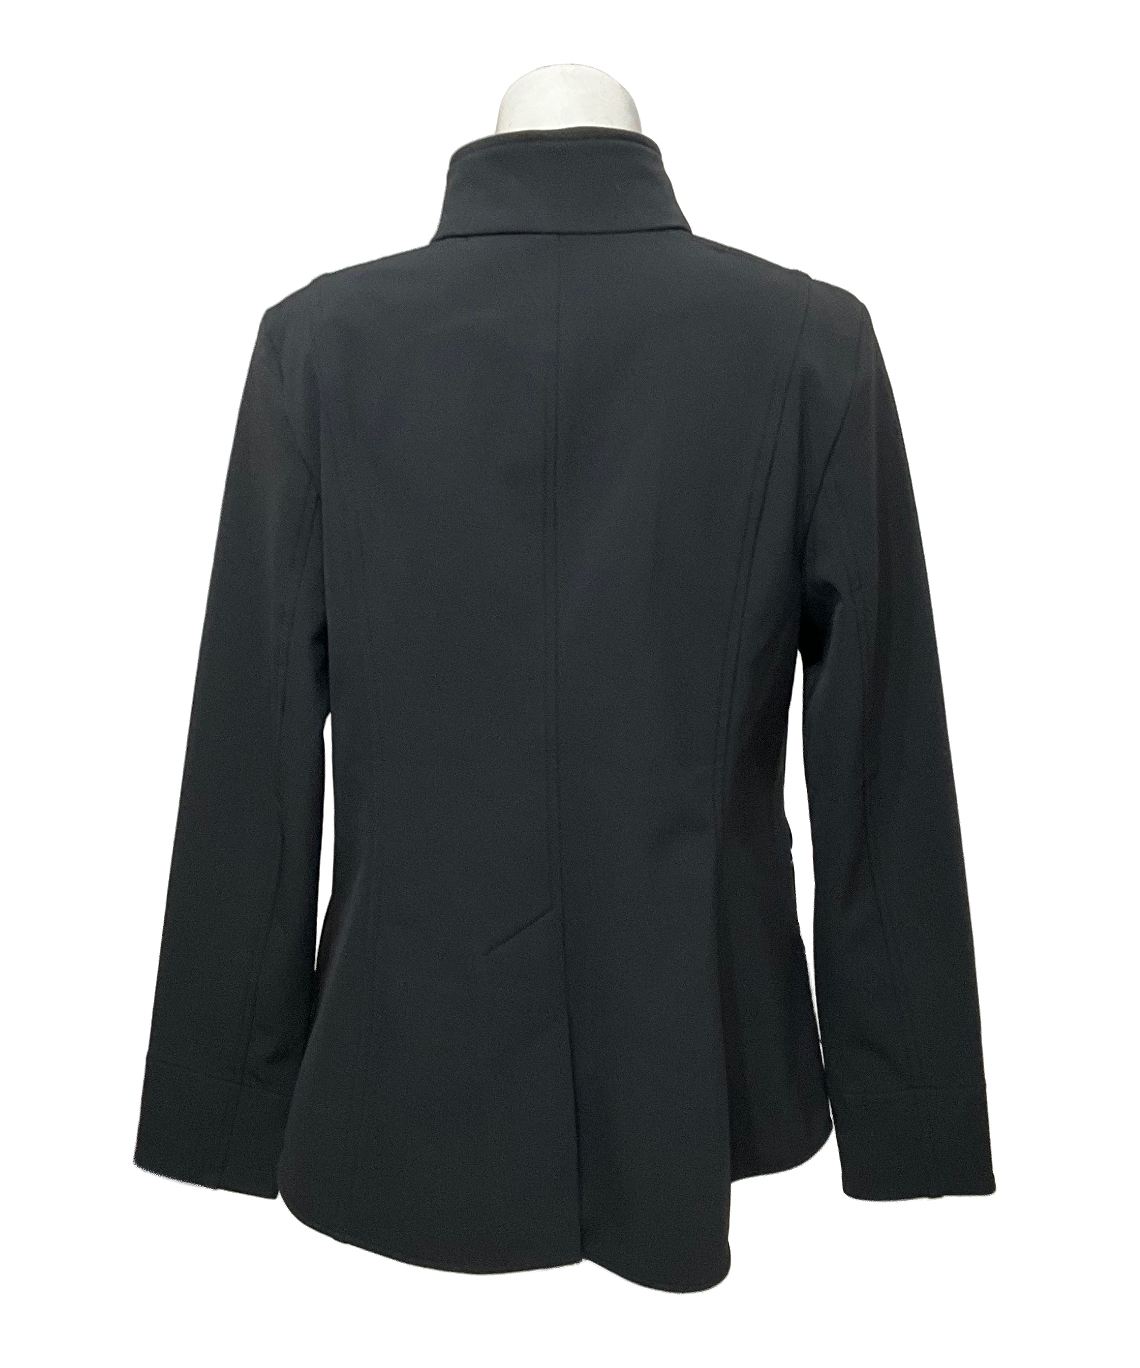 airshow jacket black large back